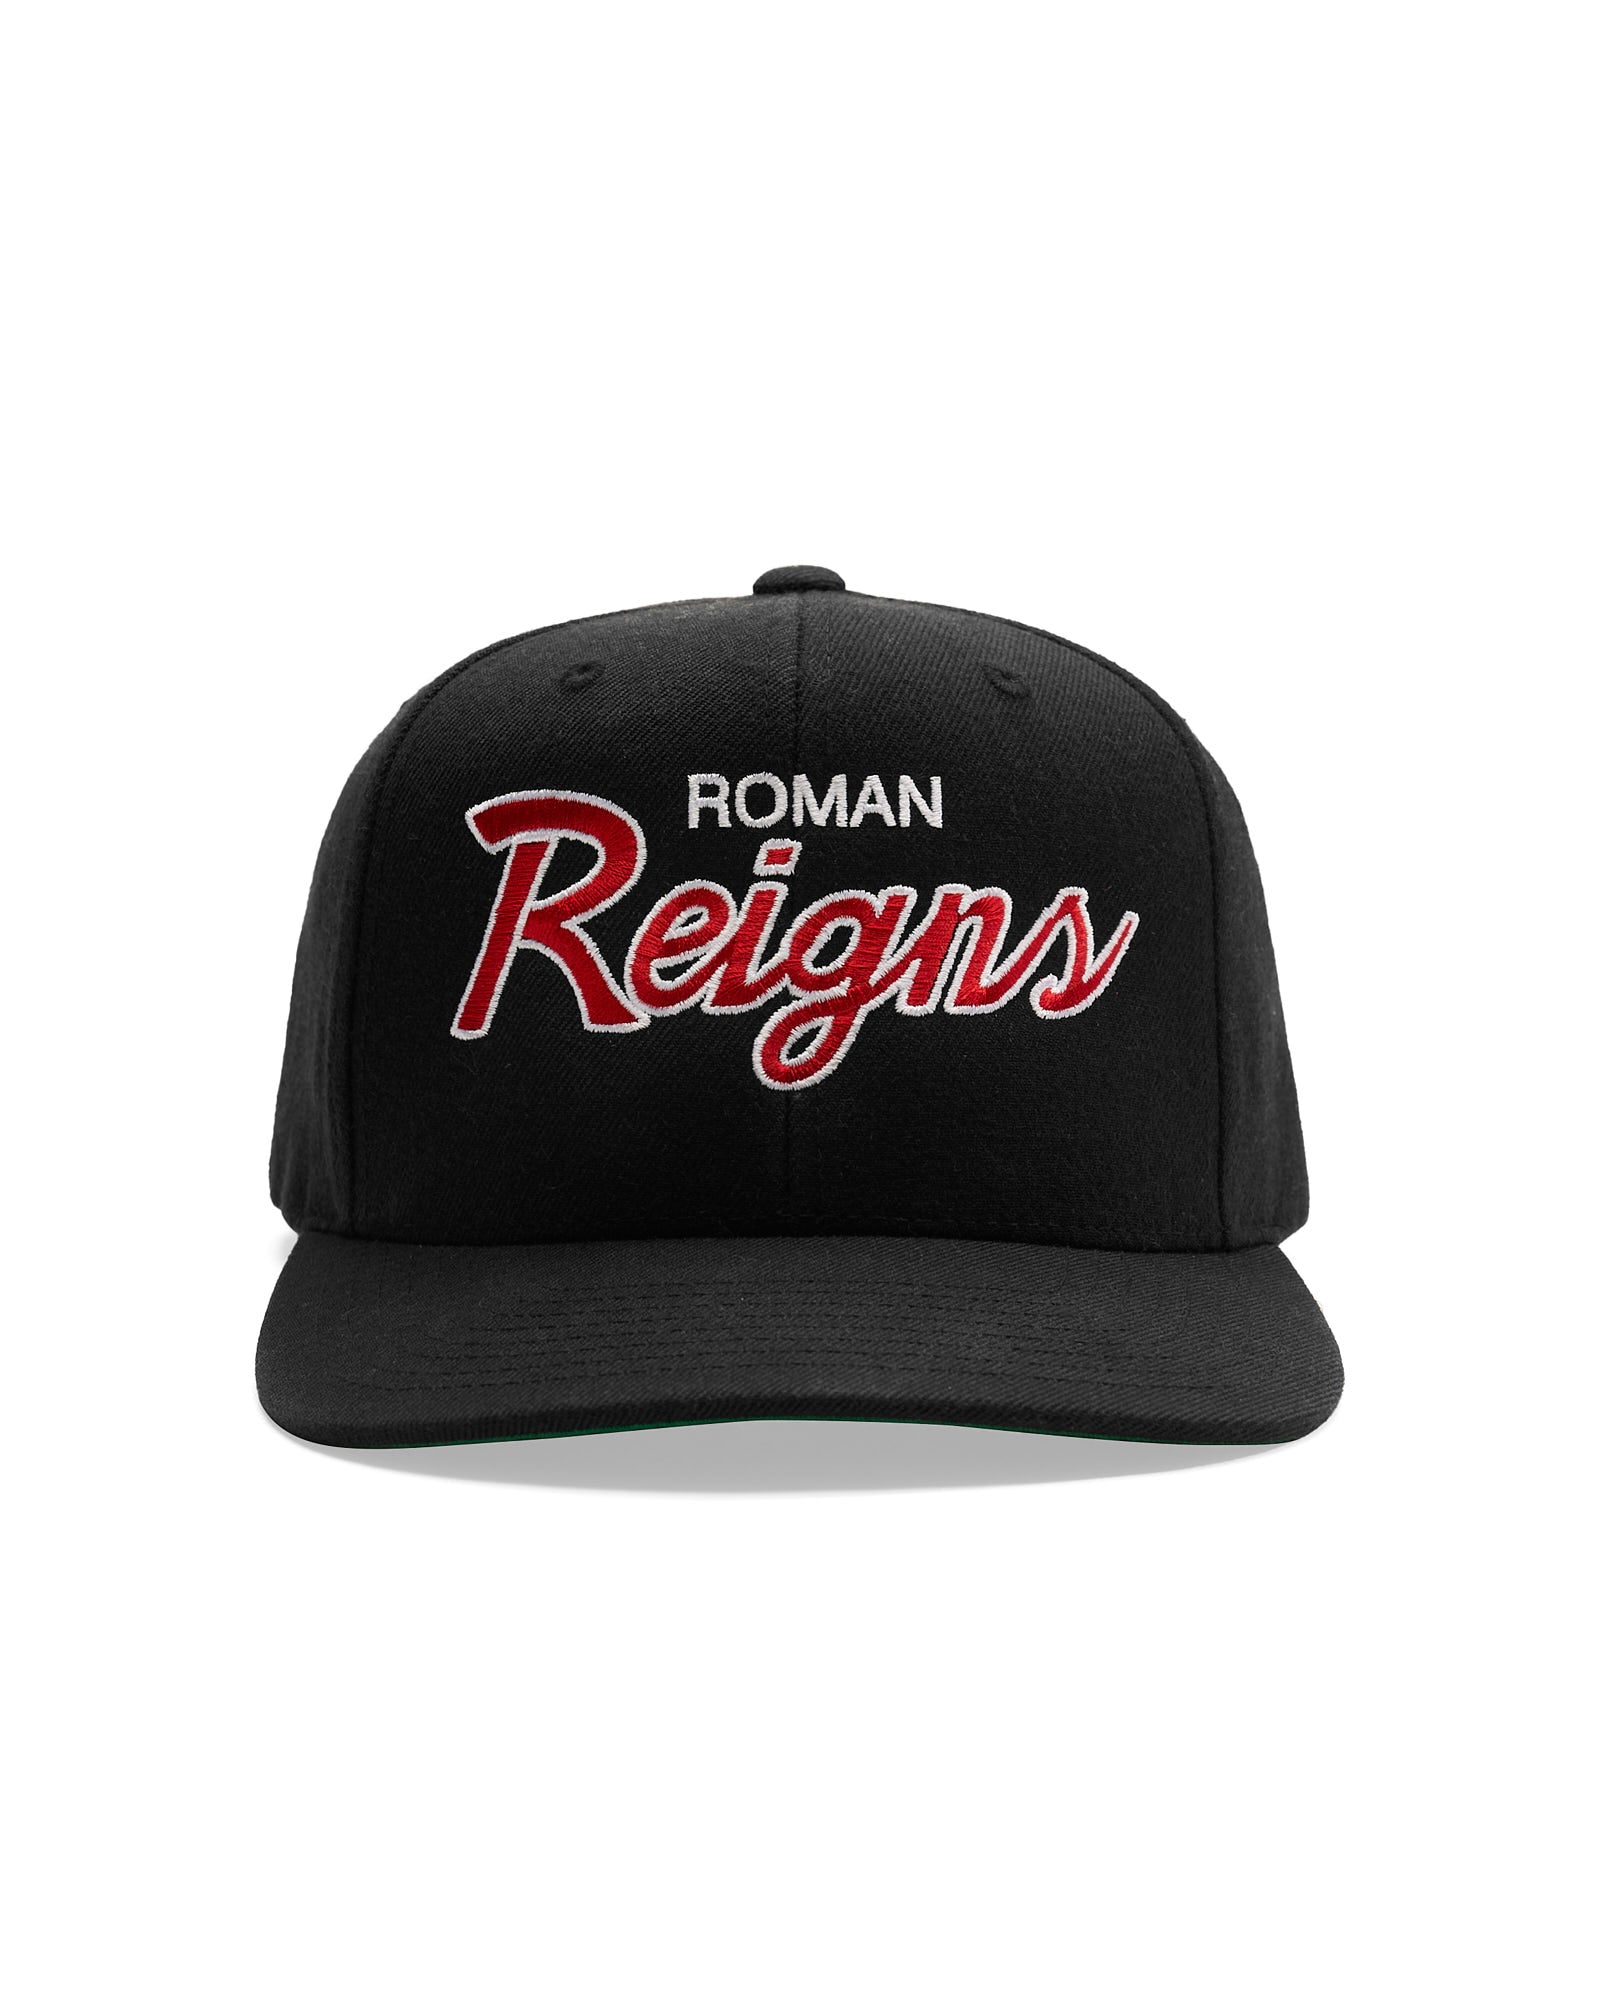 Roman Reigns Two Tone Script Snapback Hat